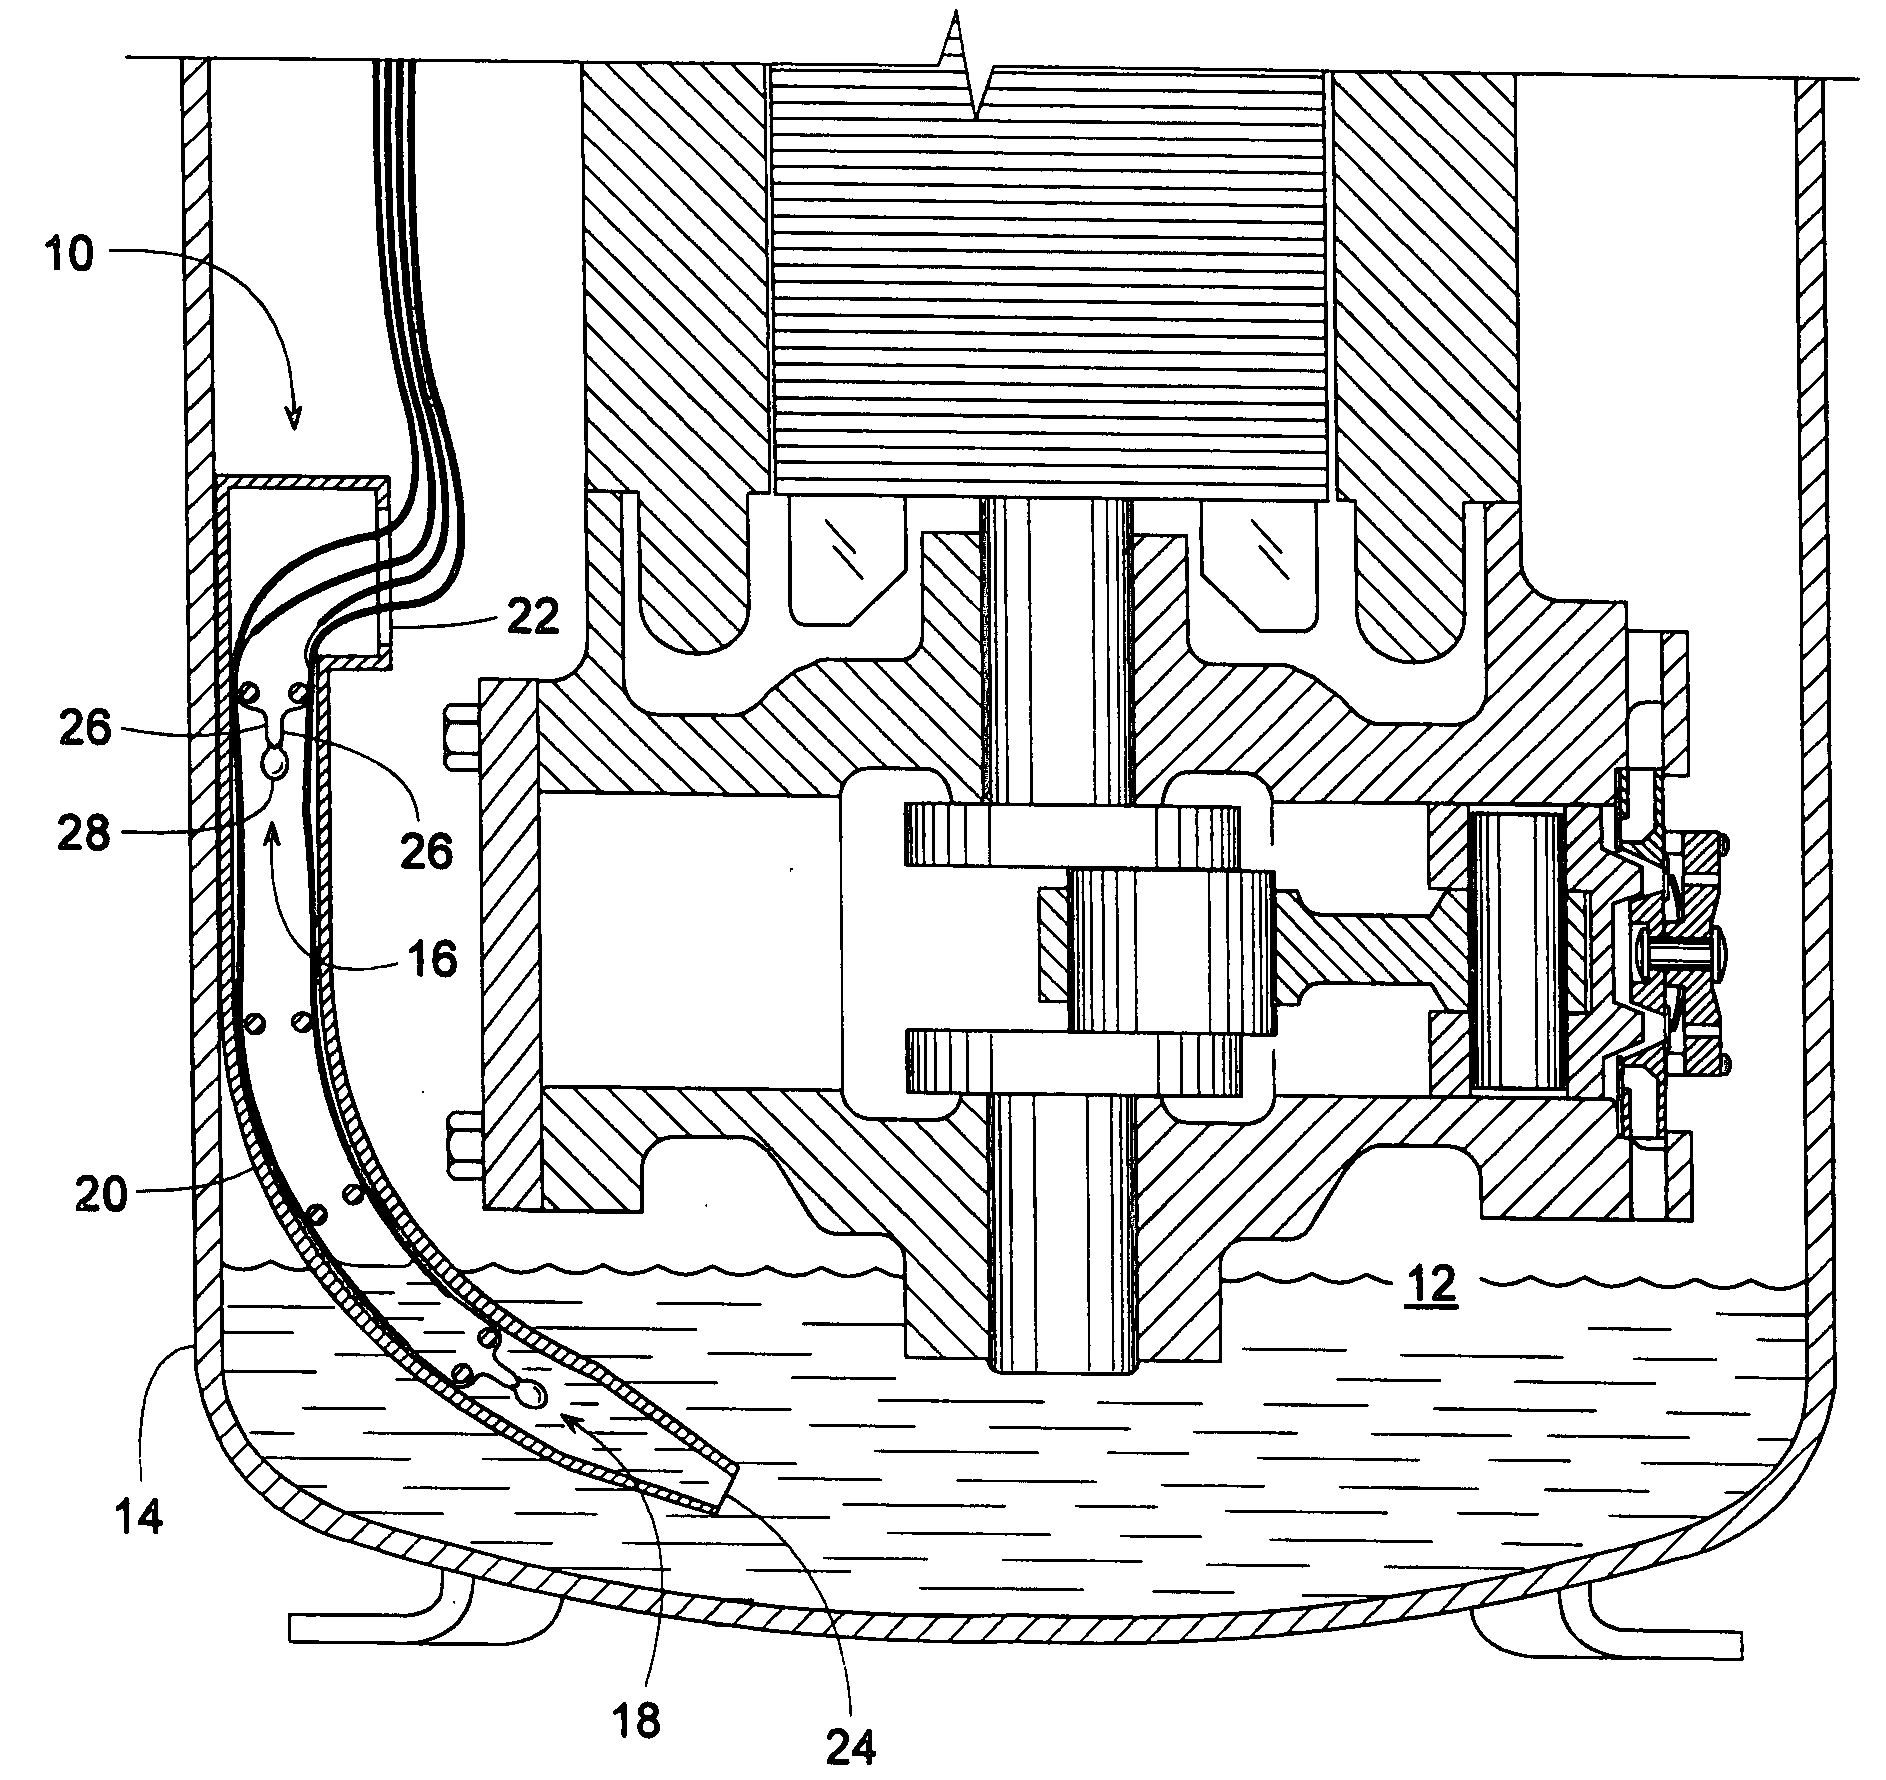 Method for sensing the liquid level in a compressor